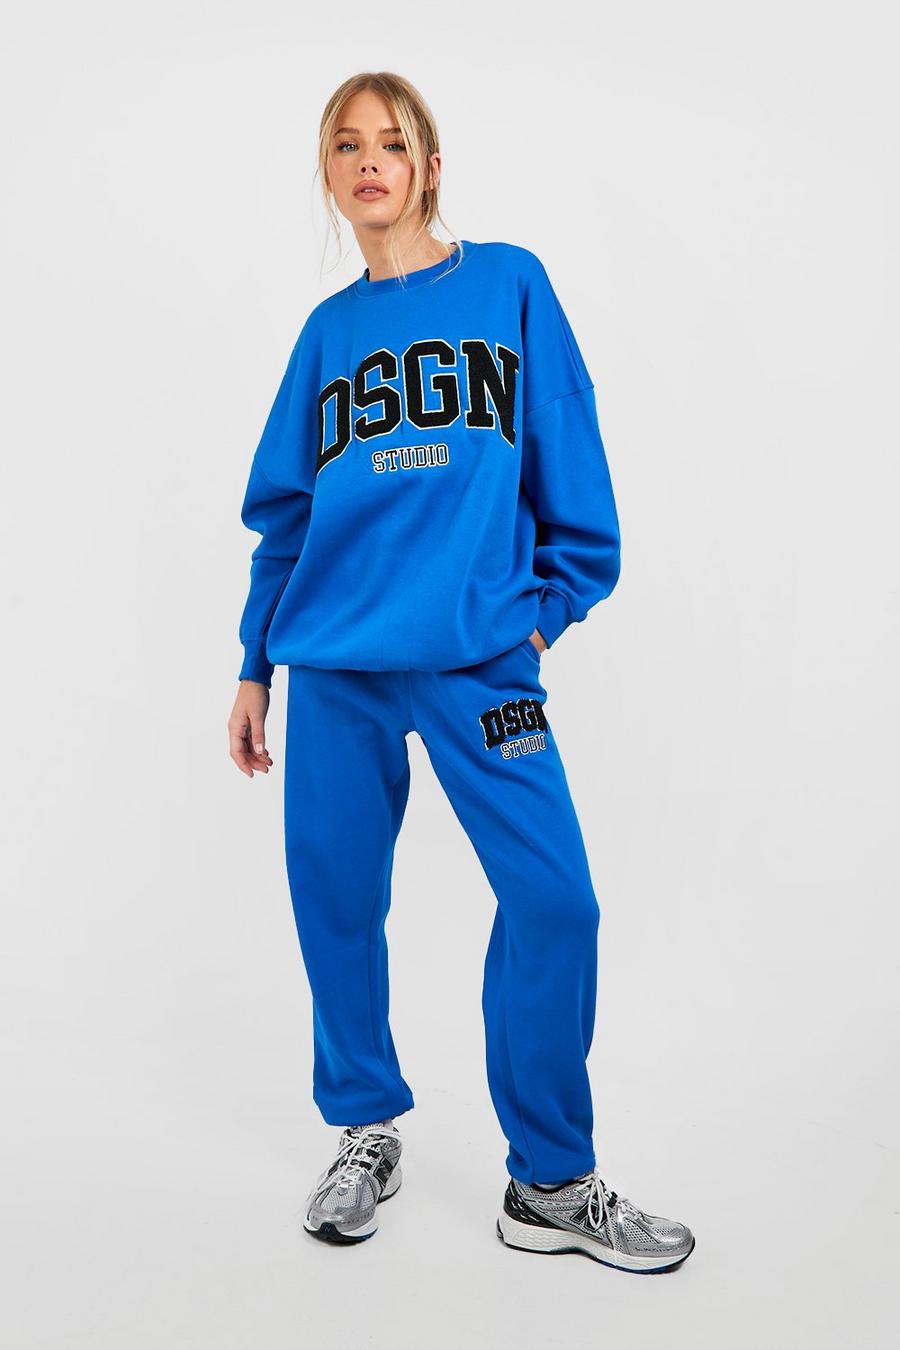 Cobalt blue Dsgn Studio Towelling Applique Sweatshirt Tracksuit 